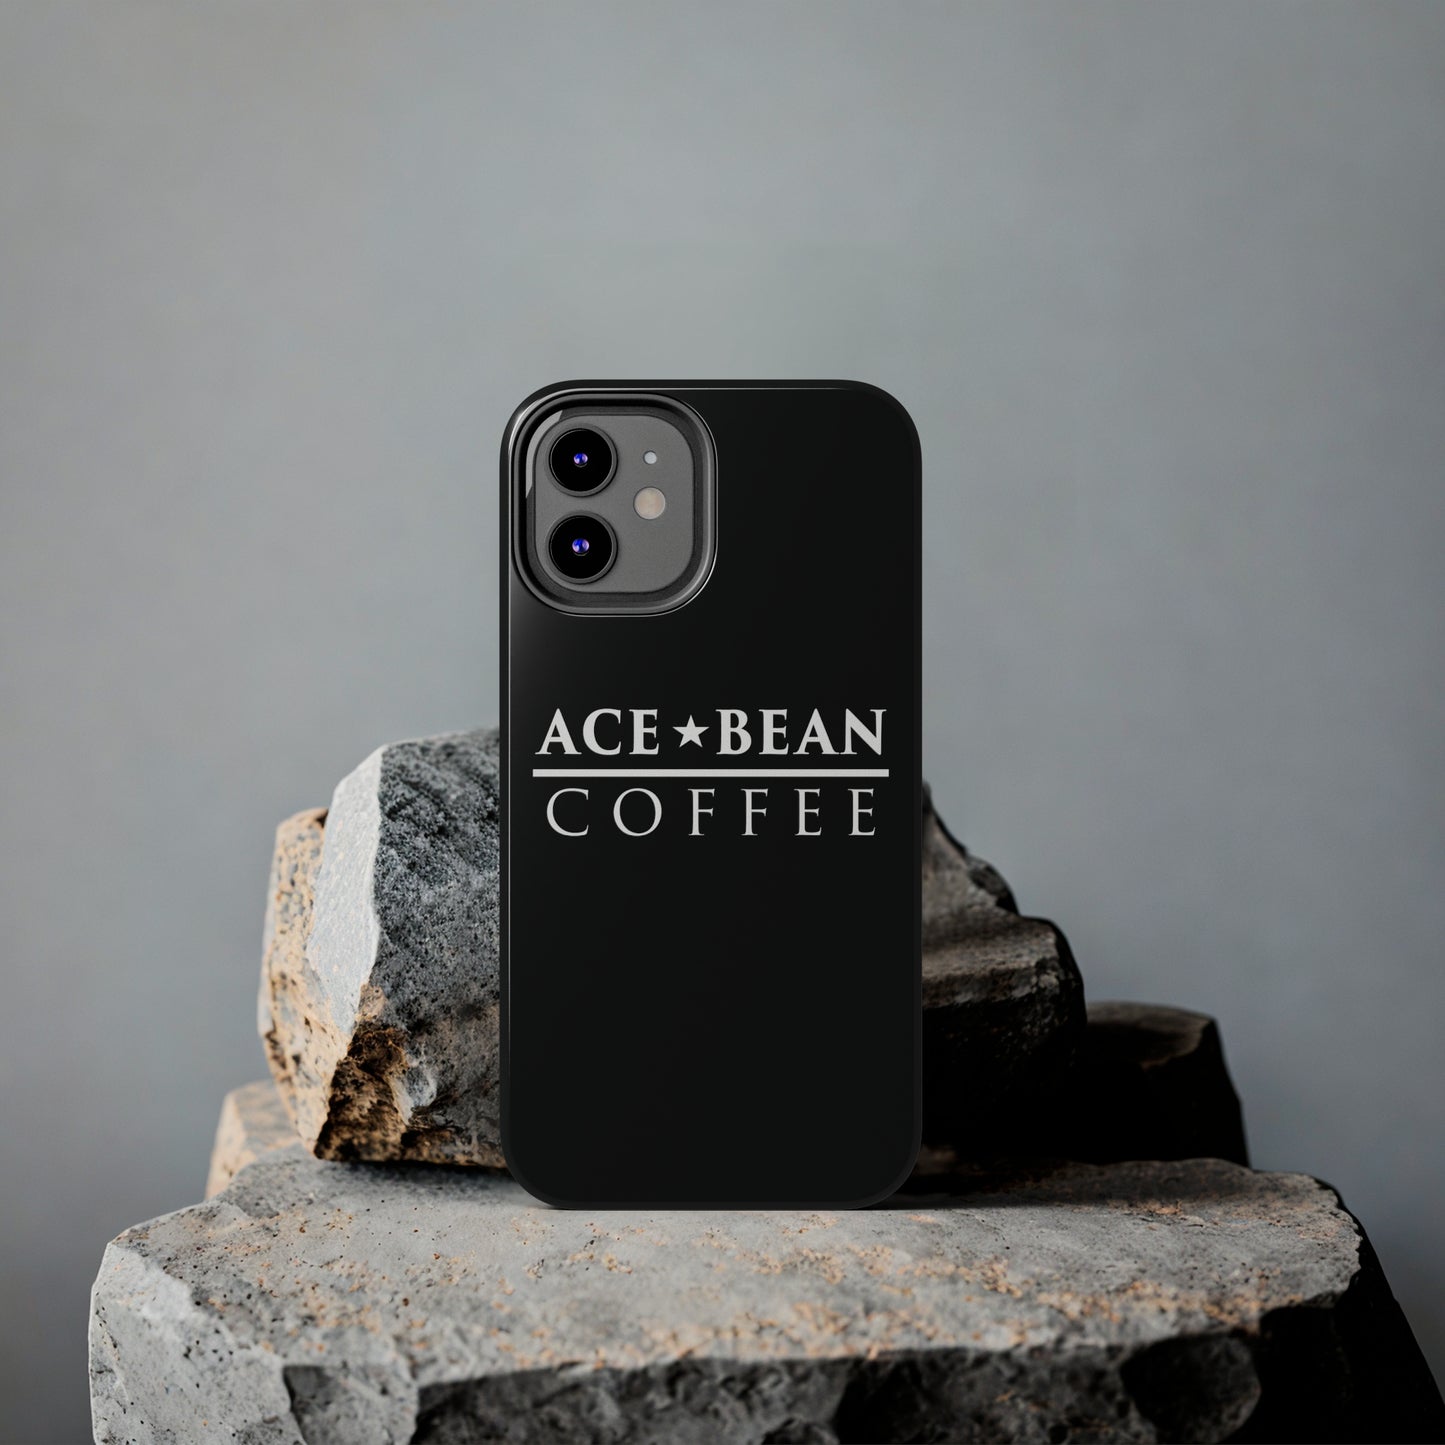 Ace Bean Coffee Logo Phone Case